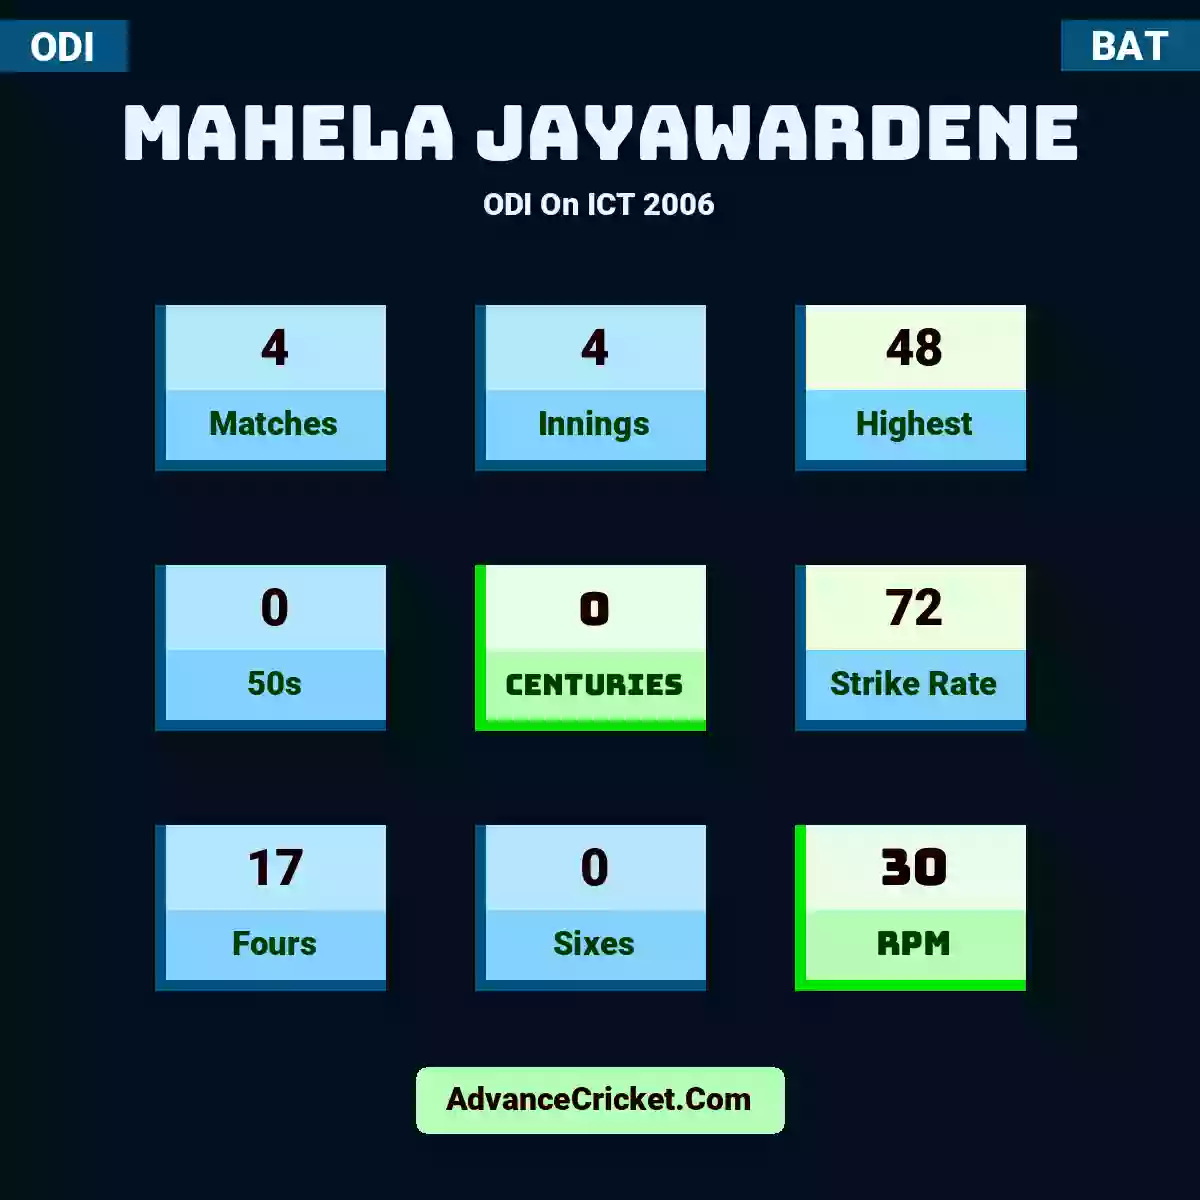 Mahela Jayawardene ODI  On ICT 2006, Mahela Jayawardene played 4 matches, scored 48 runs as highest, 0 half-centuries, and 0 centuries, with a strike rate of 72. M.Jayawardene hit 17 fours and 0 sixes, with an RPM of 30.